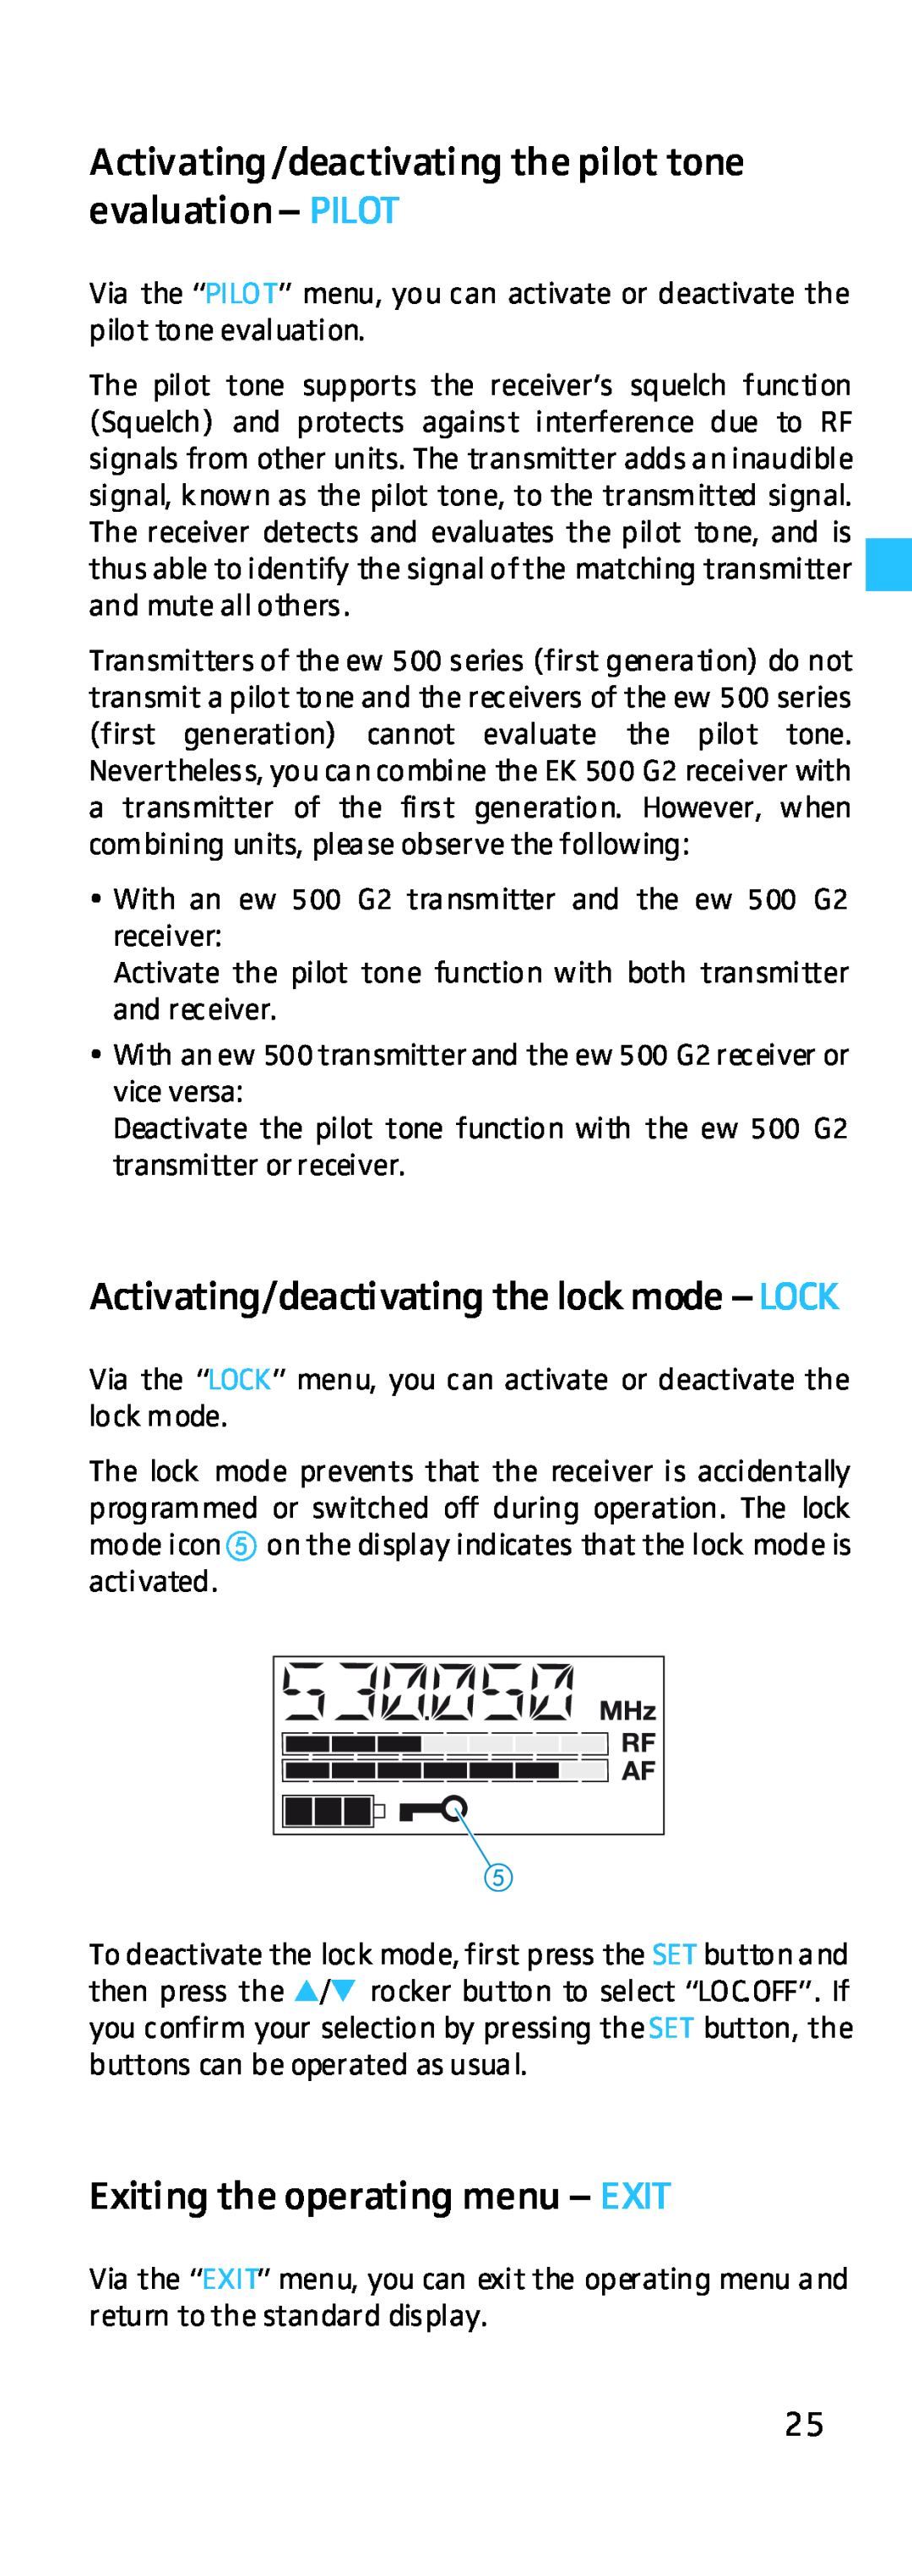 Sennheiser EK 500 G2 manual Activating/deactivating the pilot tone evaluation- PILOT, Exiting the operating menu - EXIT 